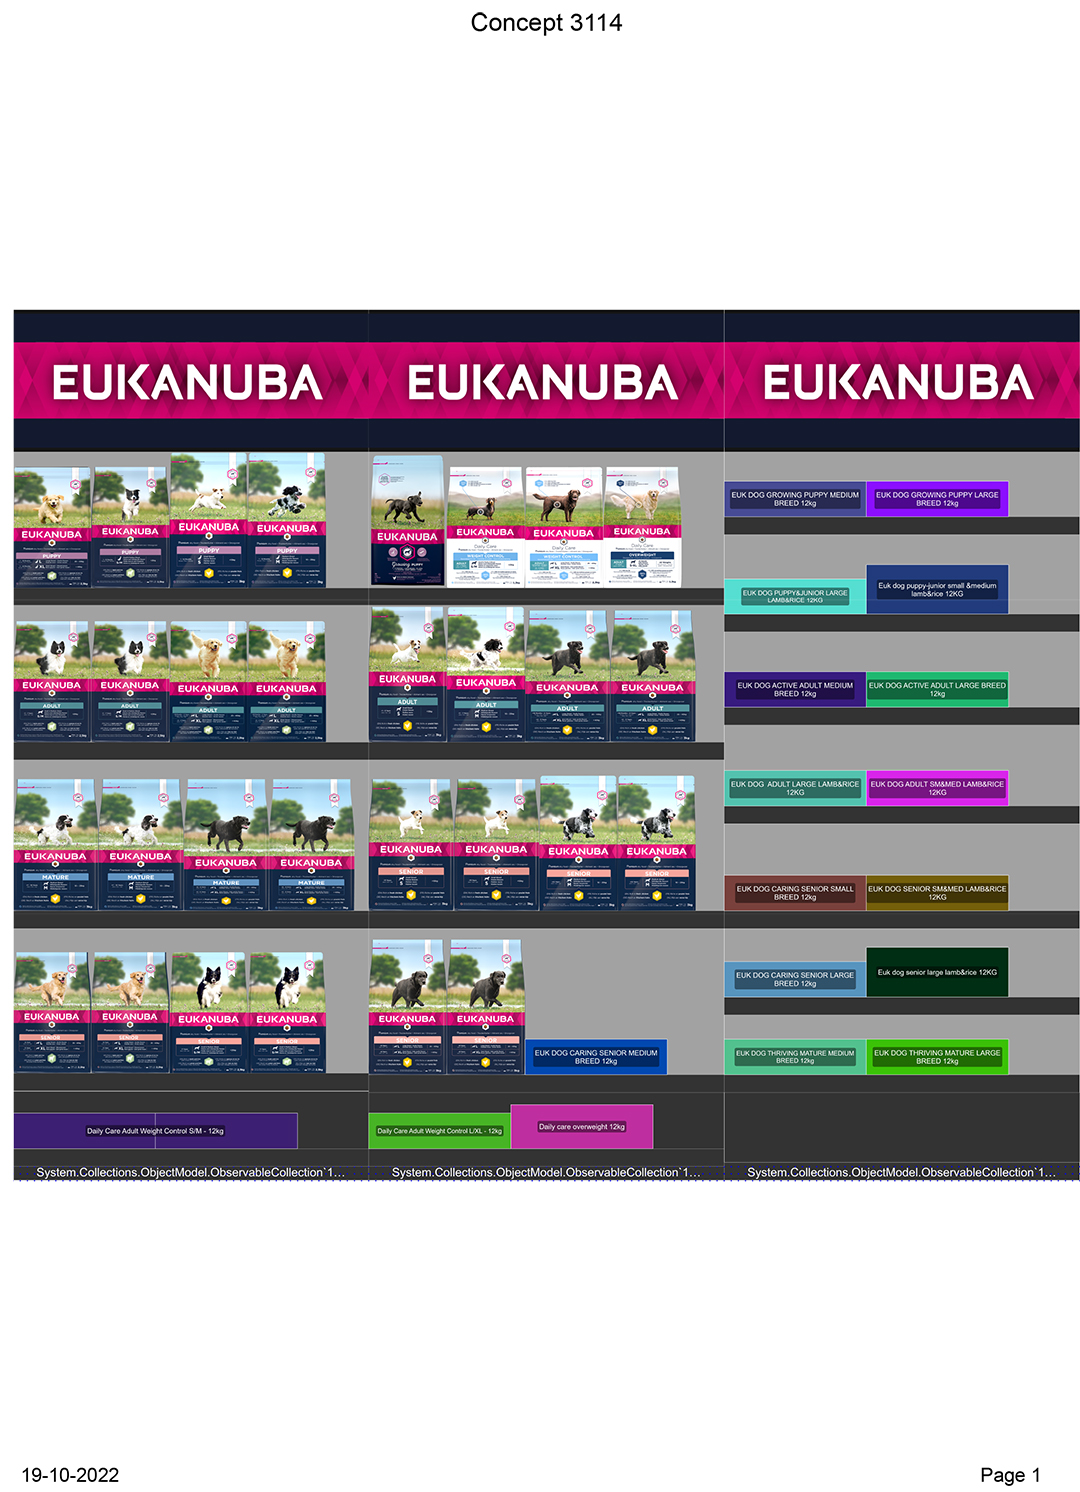 Startpakket eukanuba - Product shot